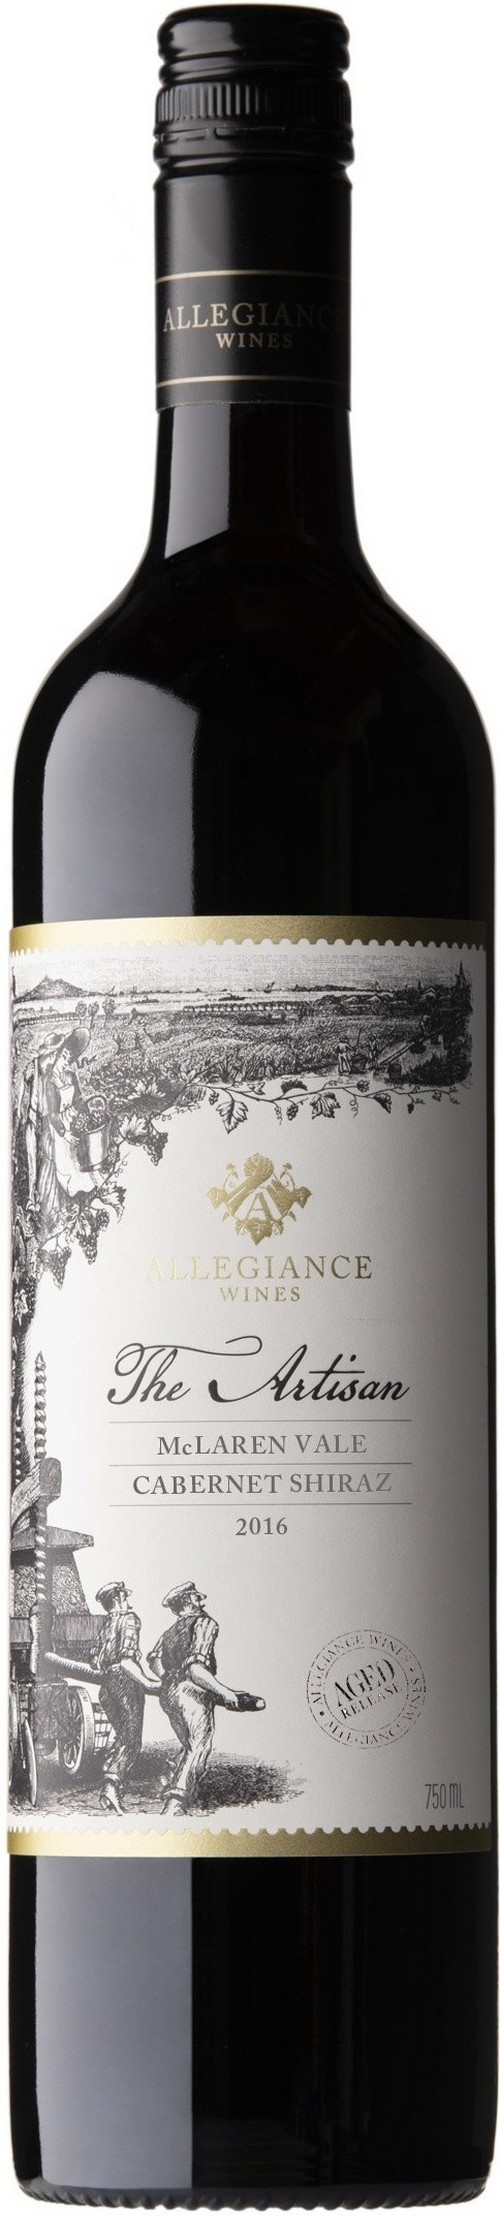 allegiance-wines-the-artisan-aged-release-mclaren-vale-cabernet-shiraz-2016